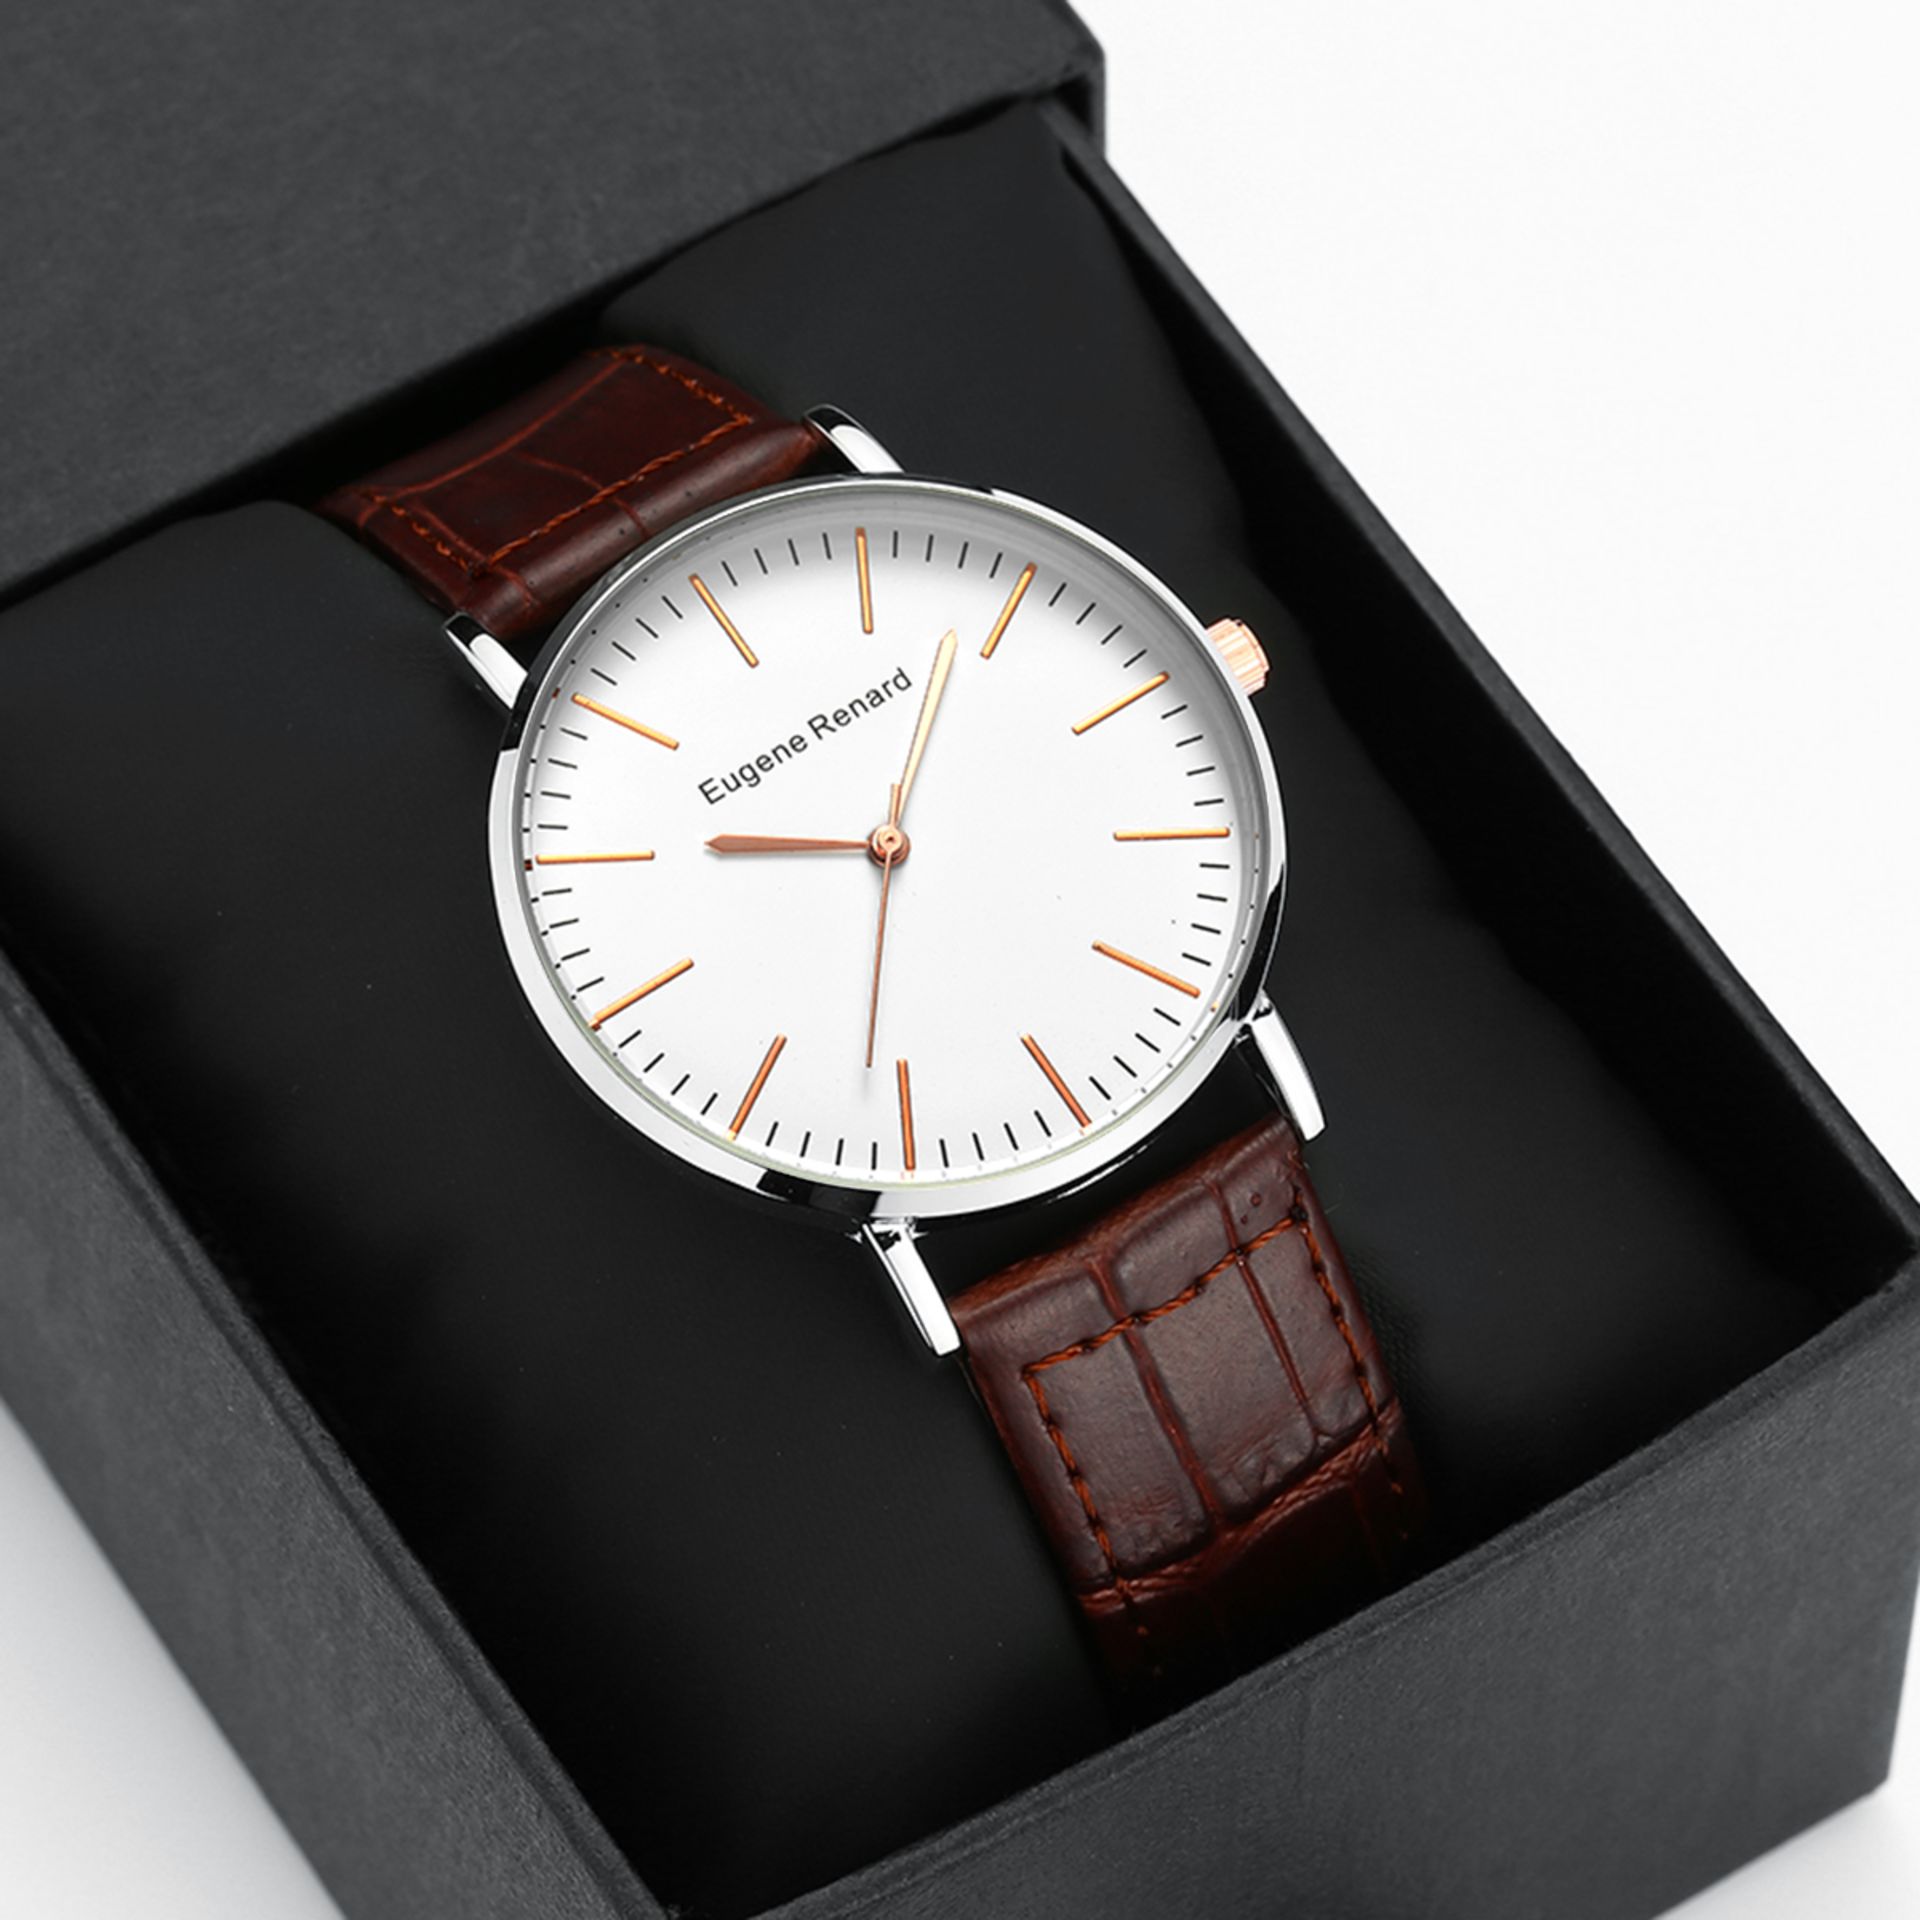 V *TRADE QTY* Brand New Gents Eugene Renard Timepiece Model 6947 - Steel Colour Case with Rose